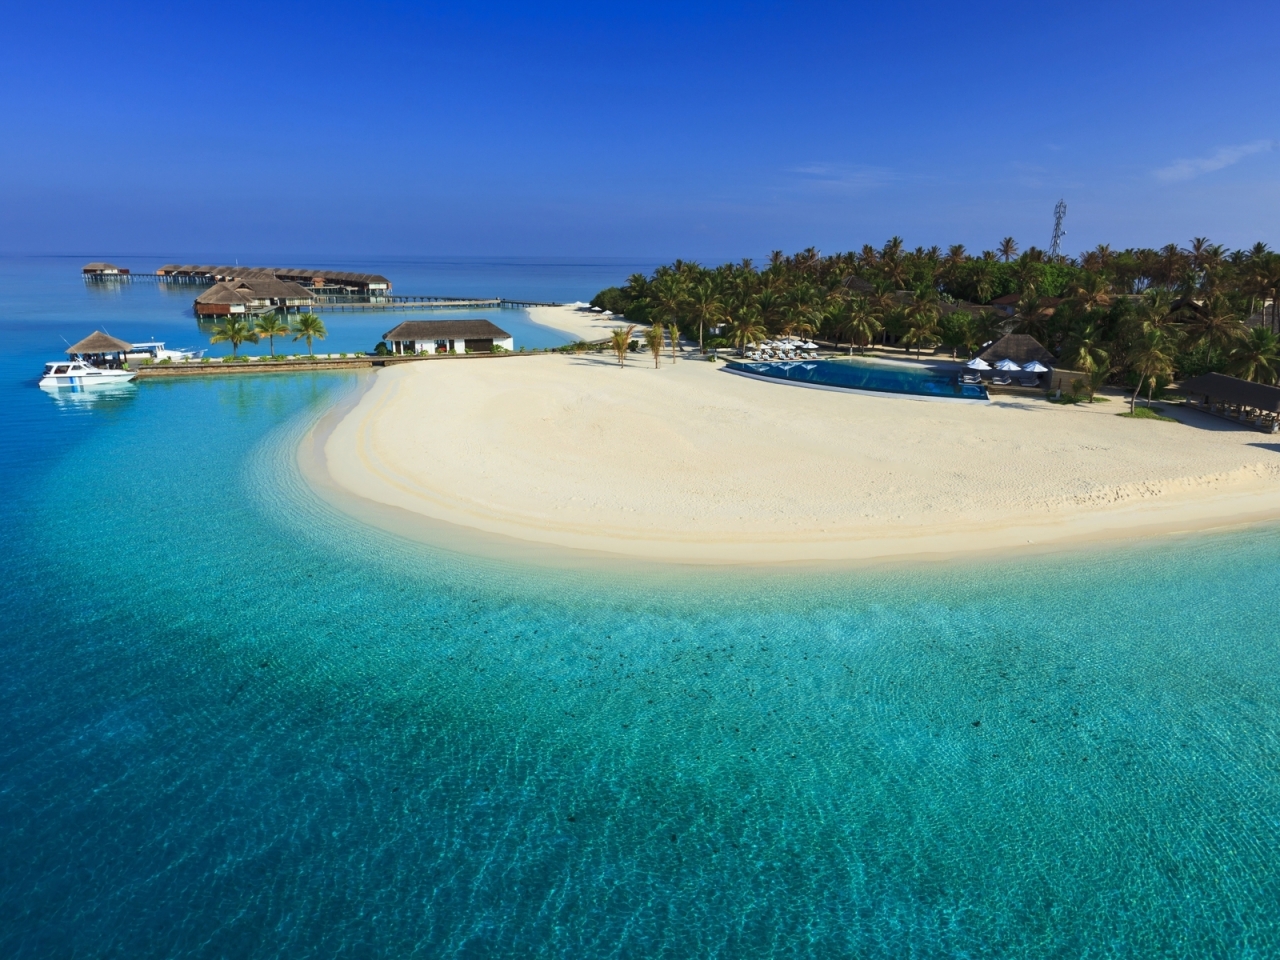 Maldives Luxury Resort for 1280 x 960 resolution